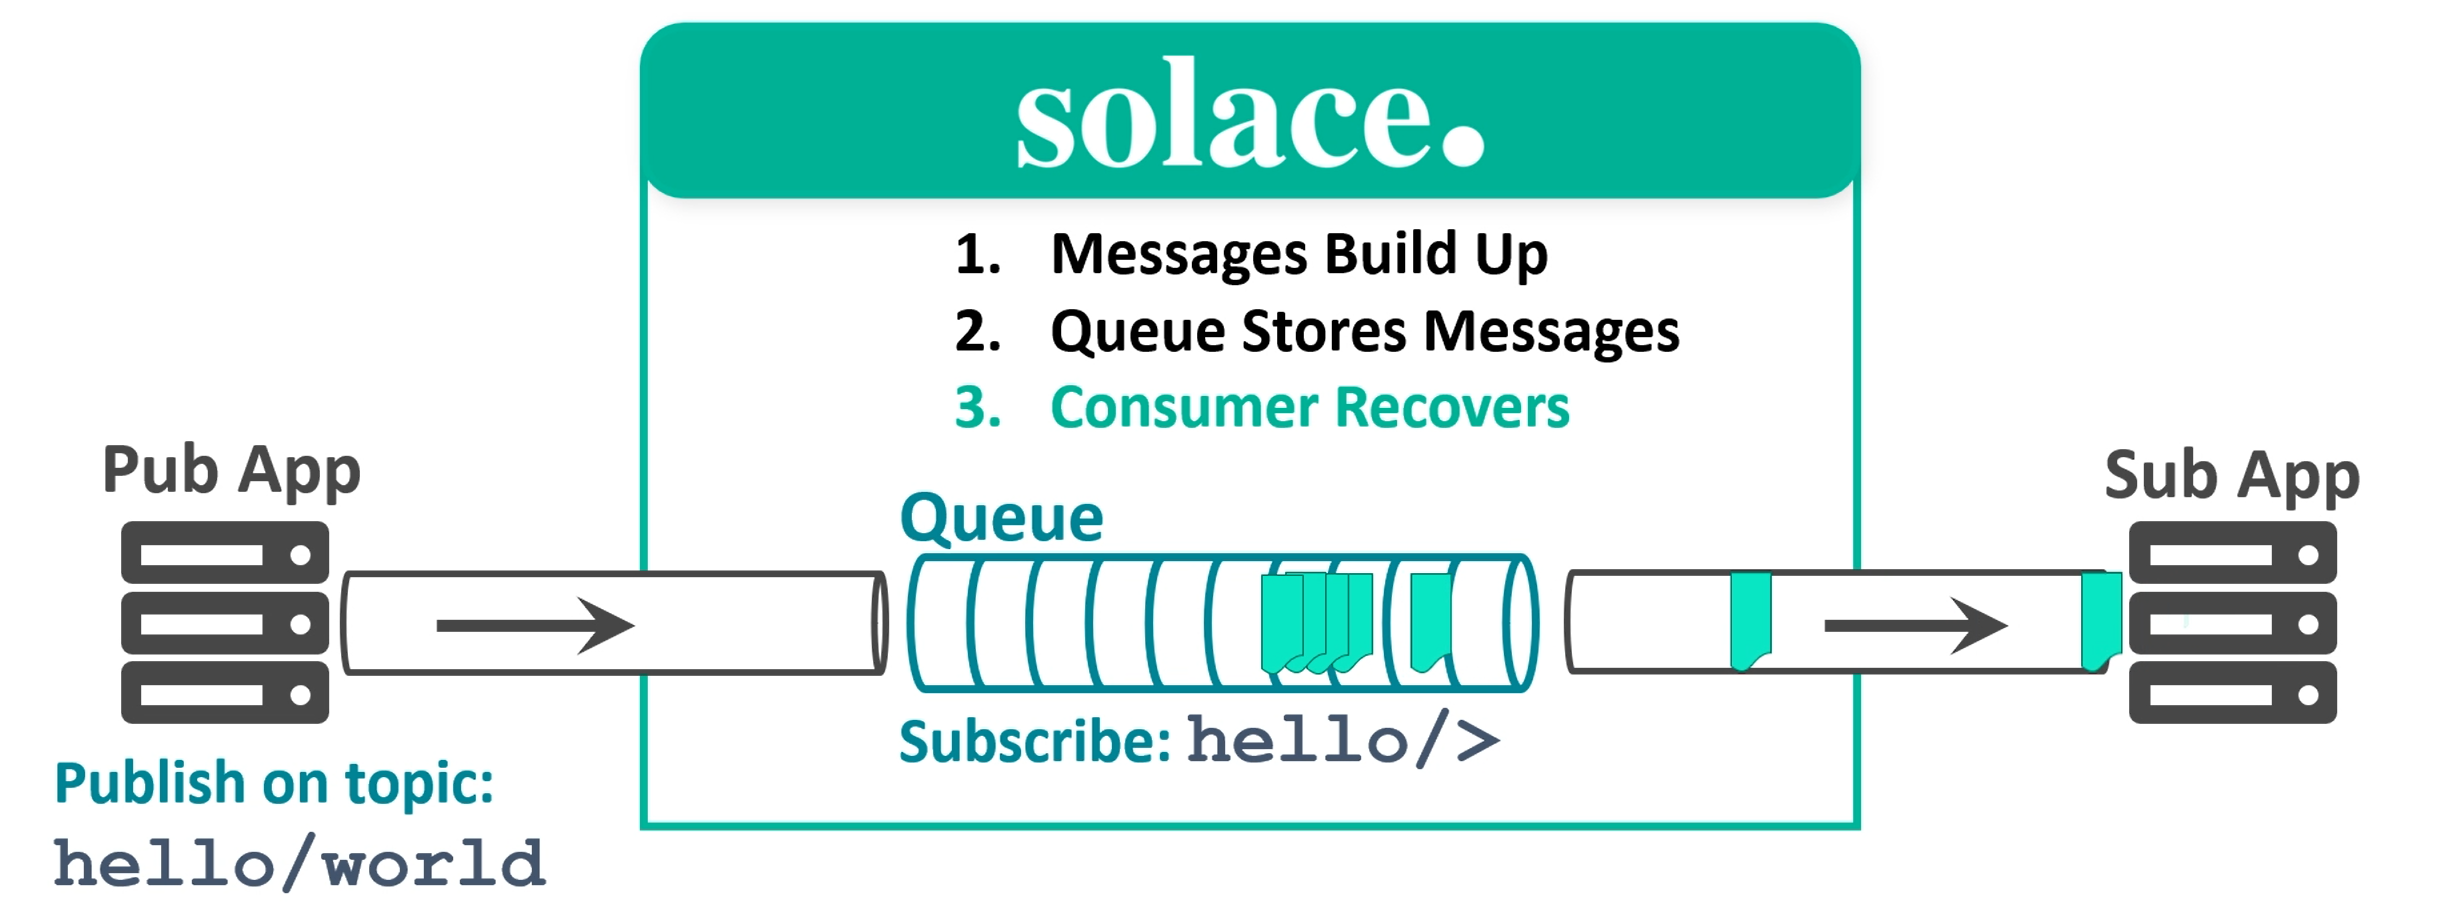 message queue features